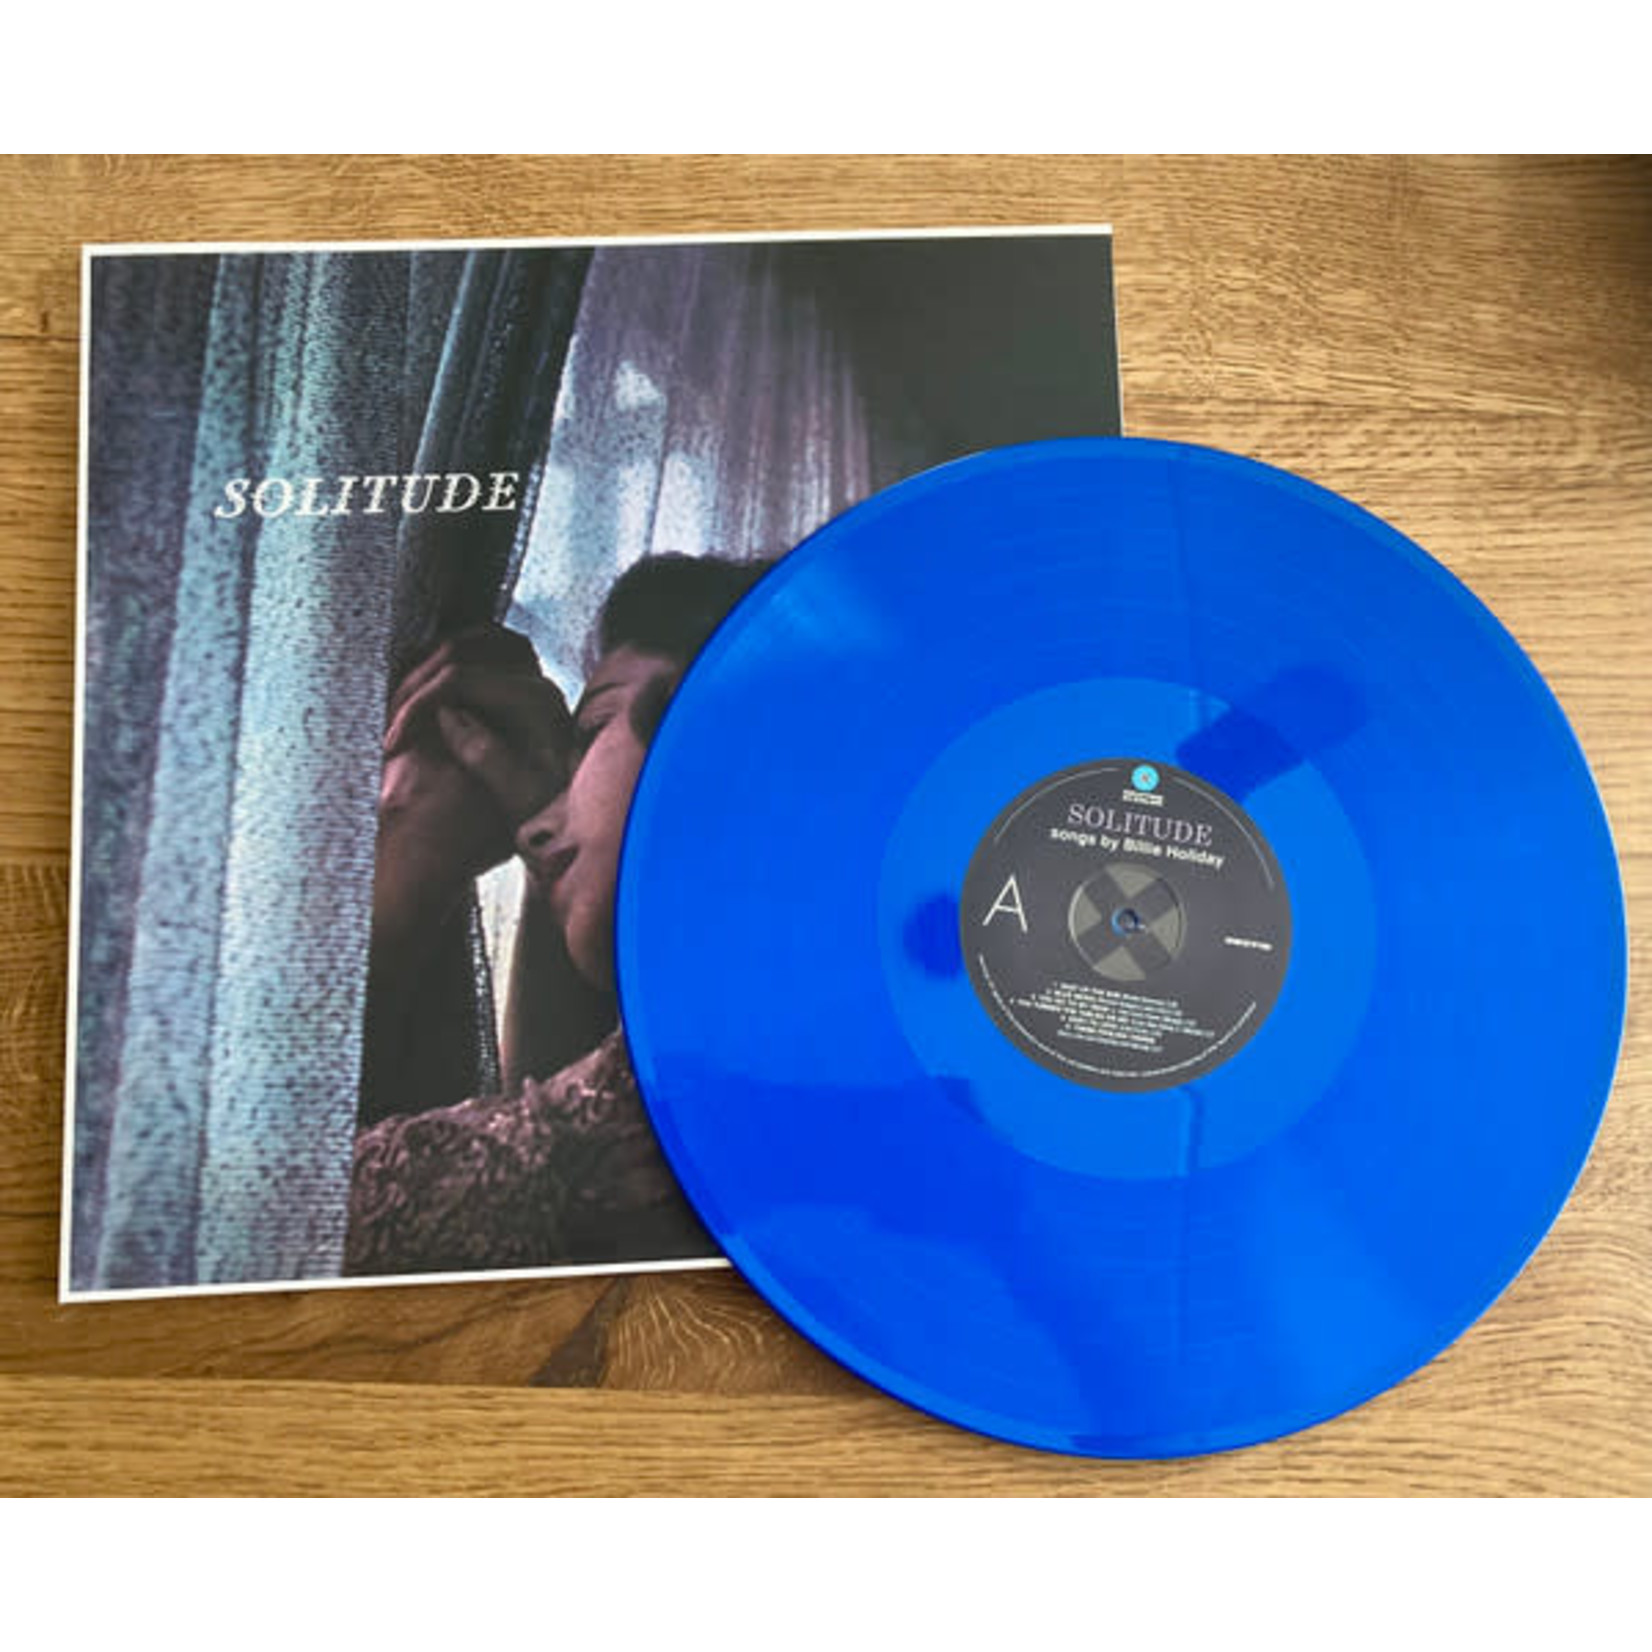 [New] Billie Holiday - Solitude (180g, blue vinyl)